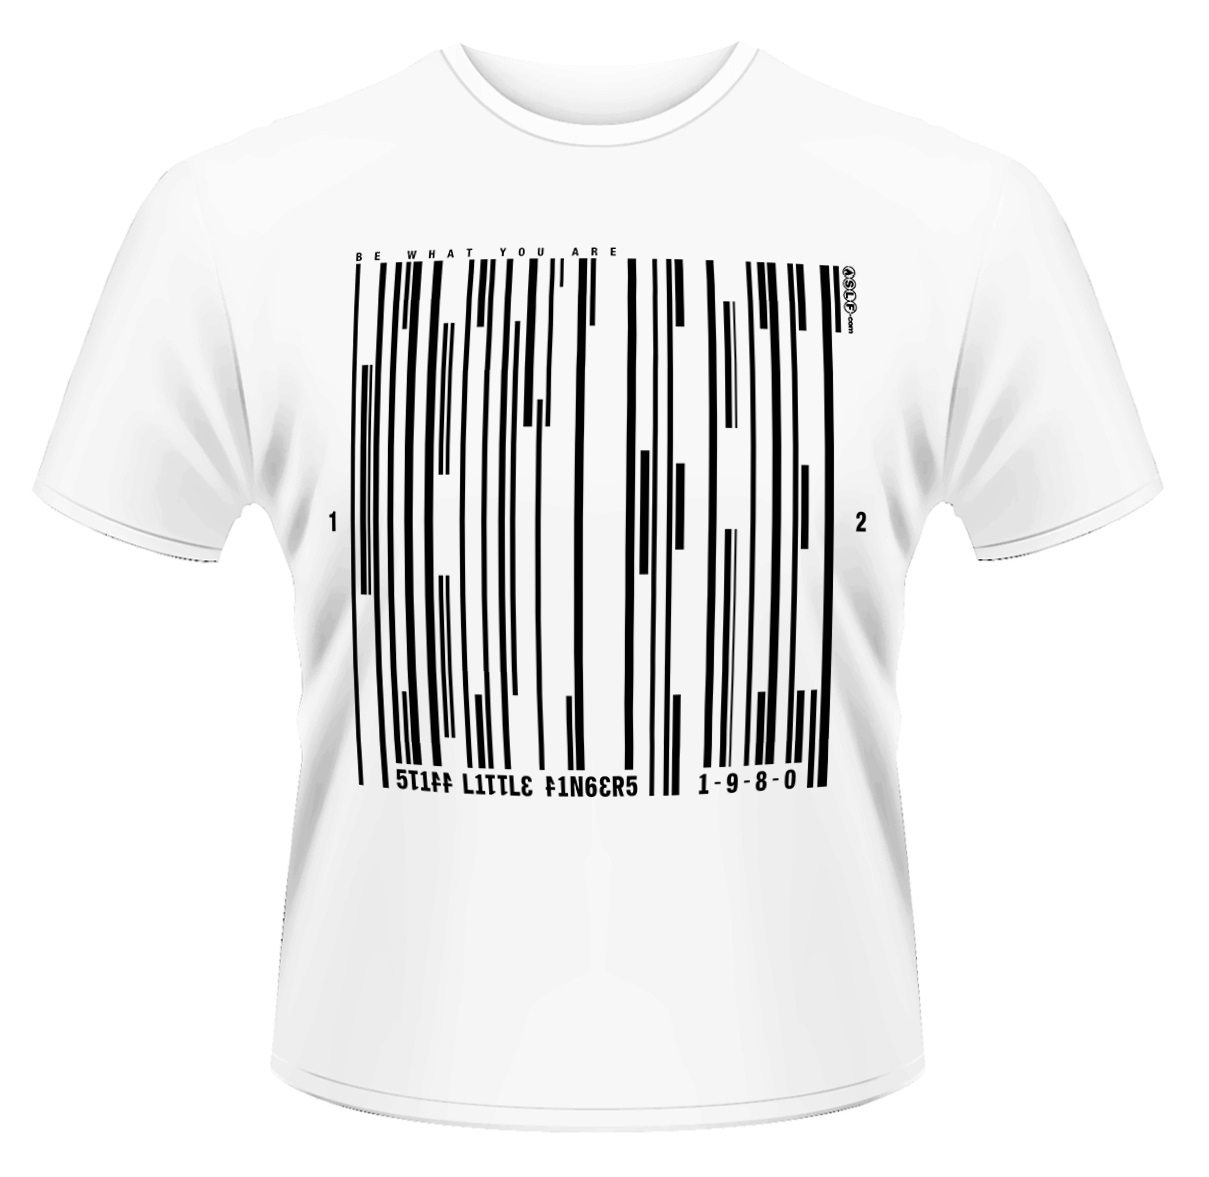 Stiff Little Fingers 'Barcode' T-Shirt - NEW & OFFICIAL | eBay